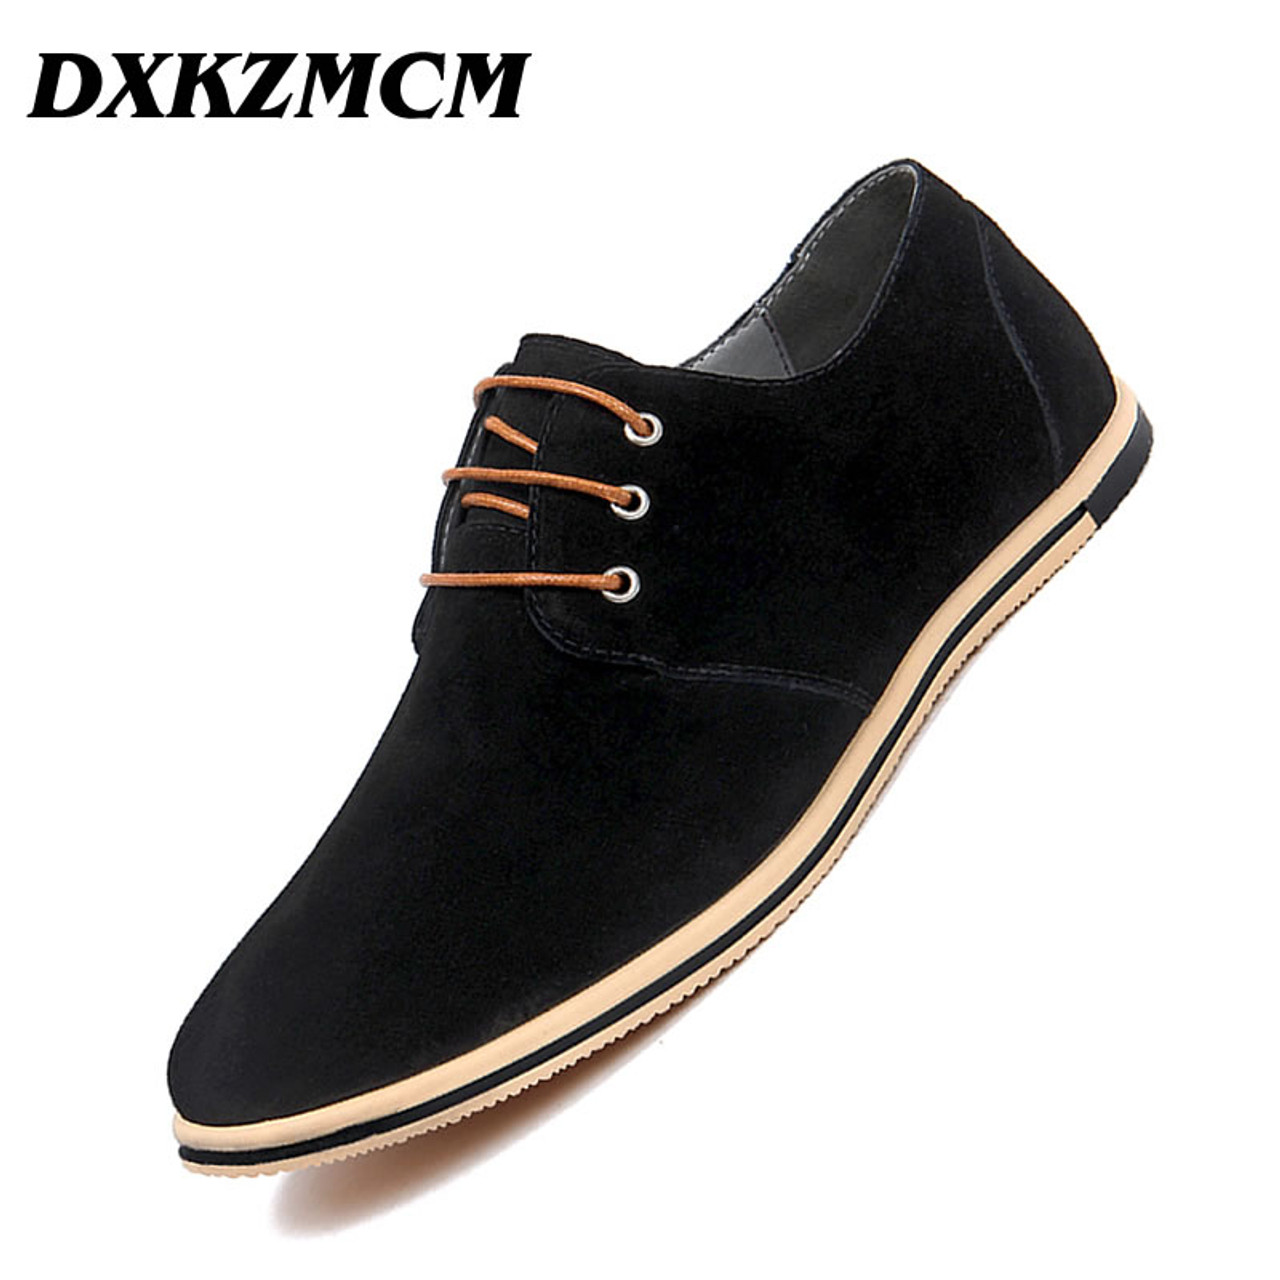 DXKZMCM Handmade Men Leather Shoes 